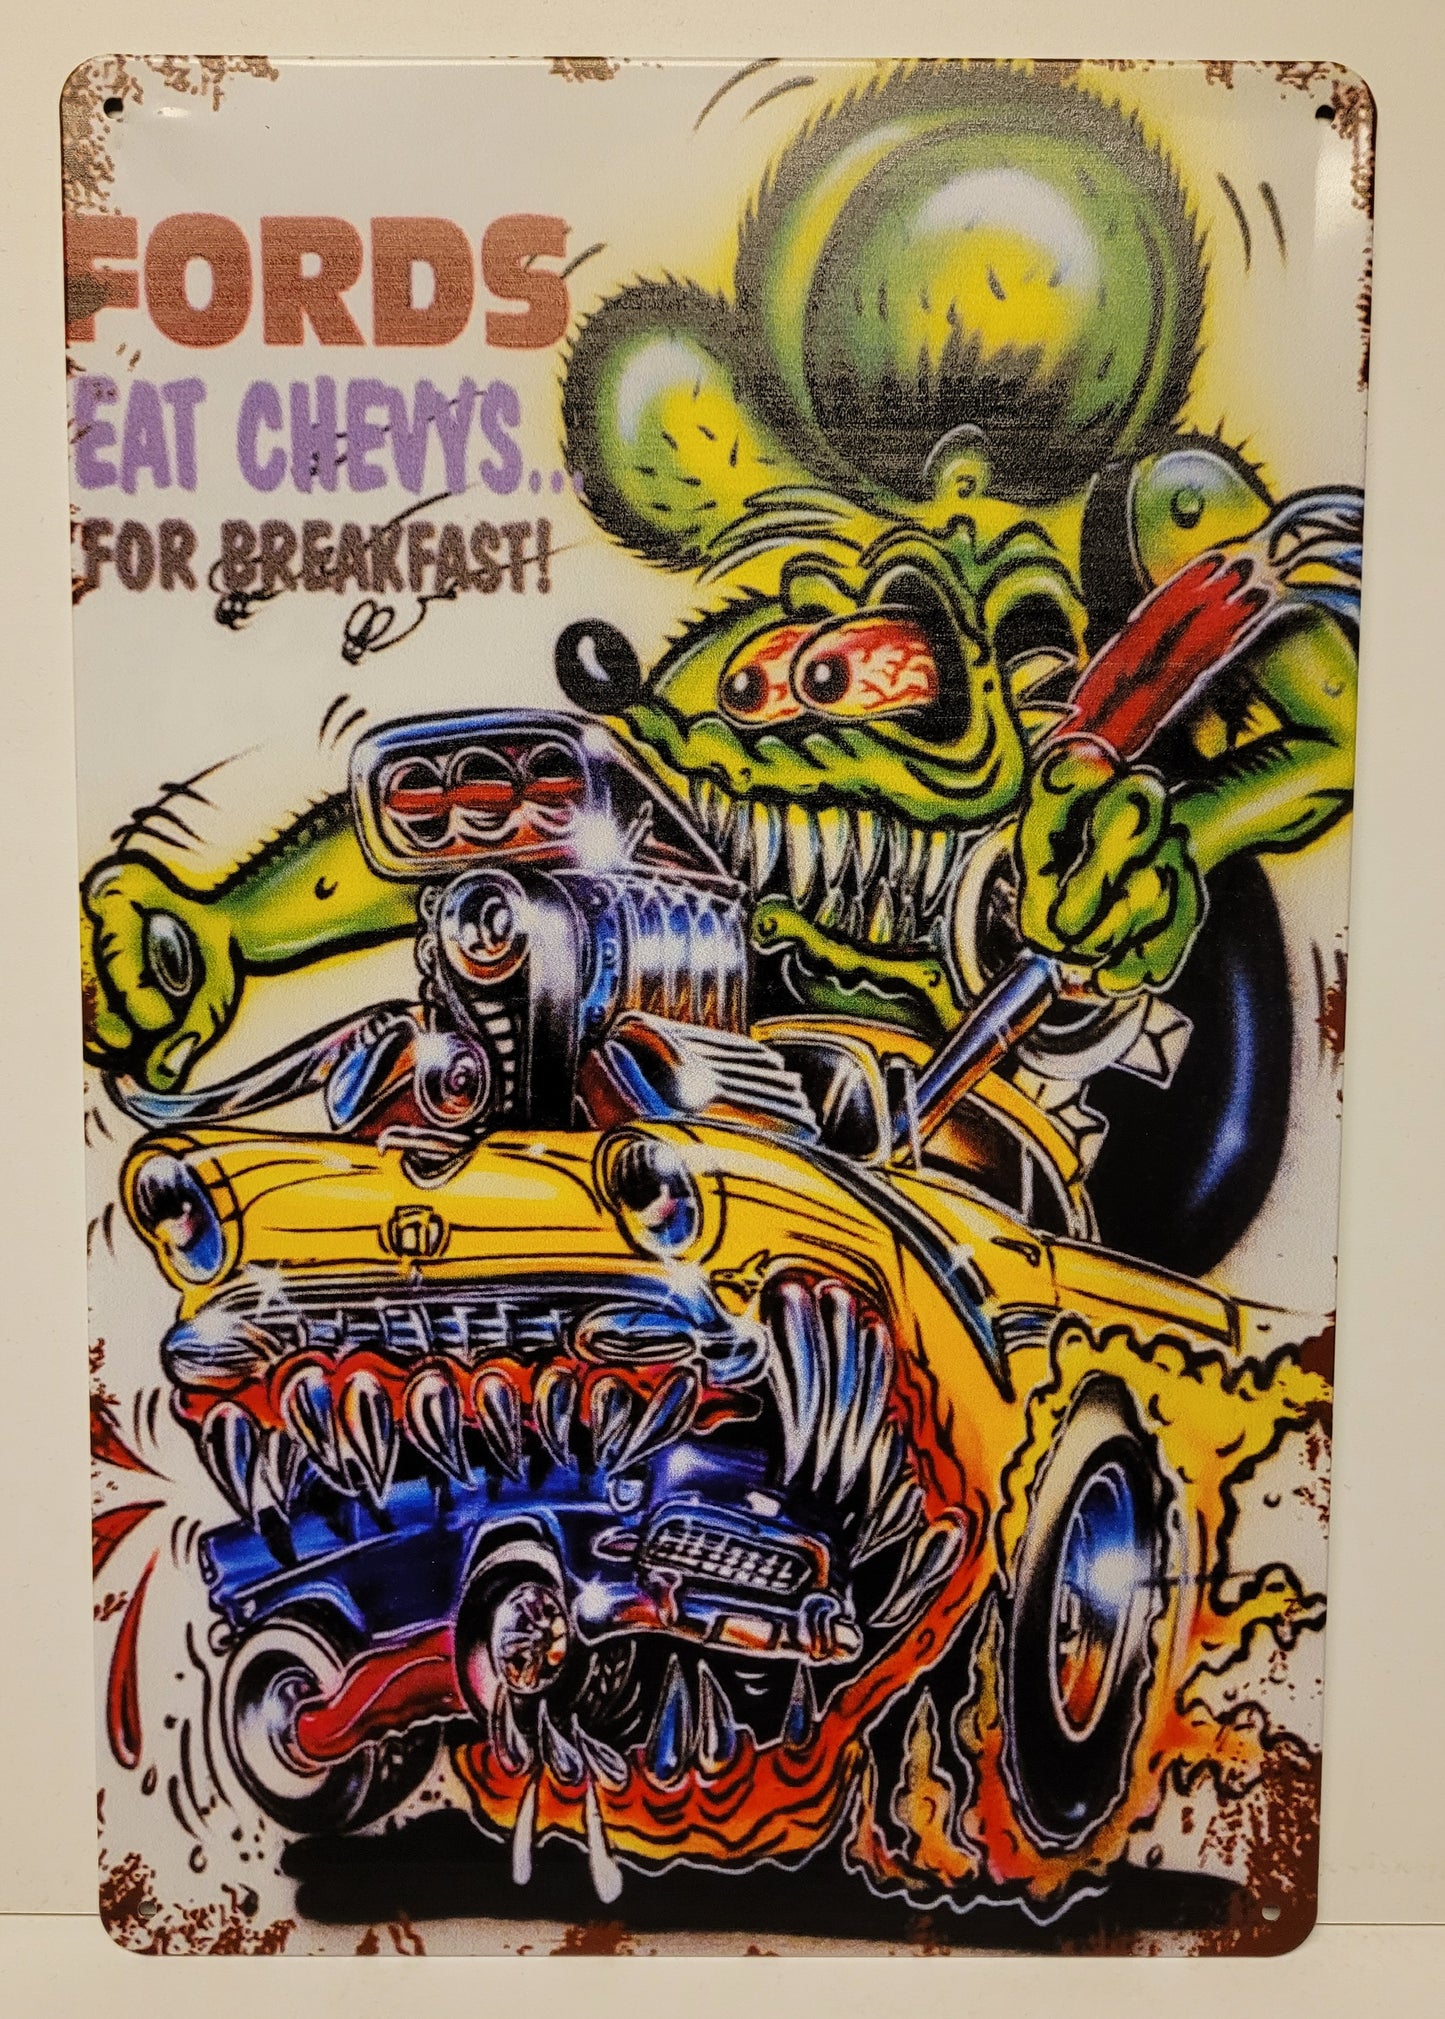 Plåtskylt Fords eat Chevys